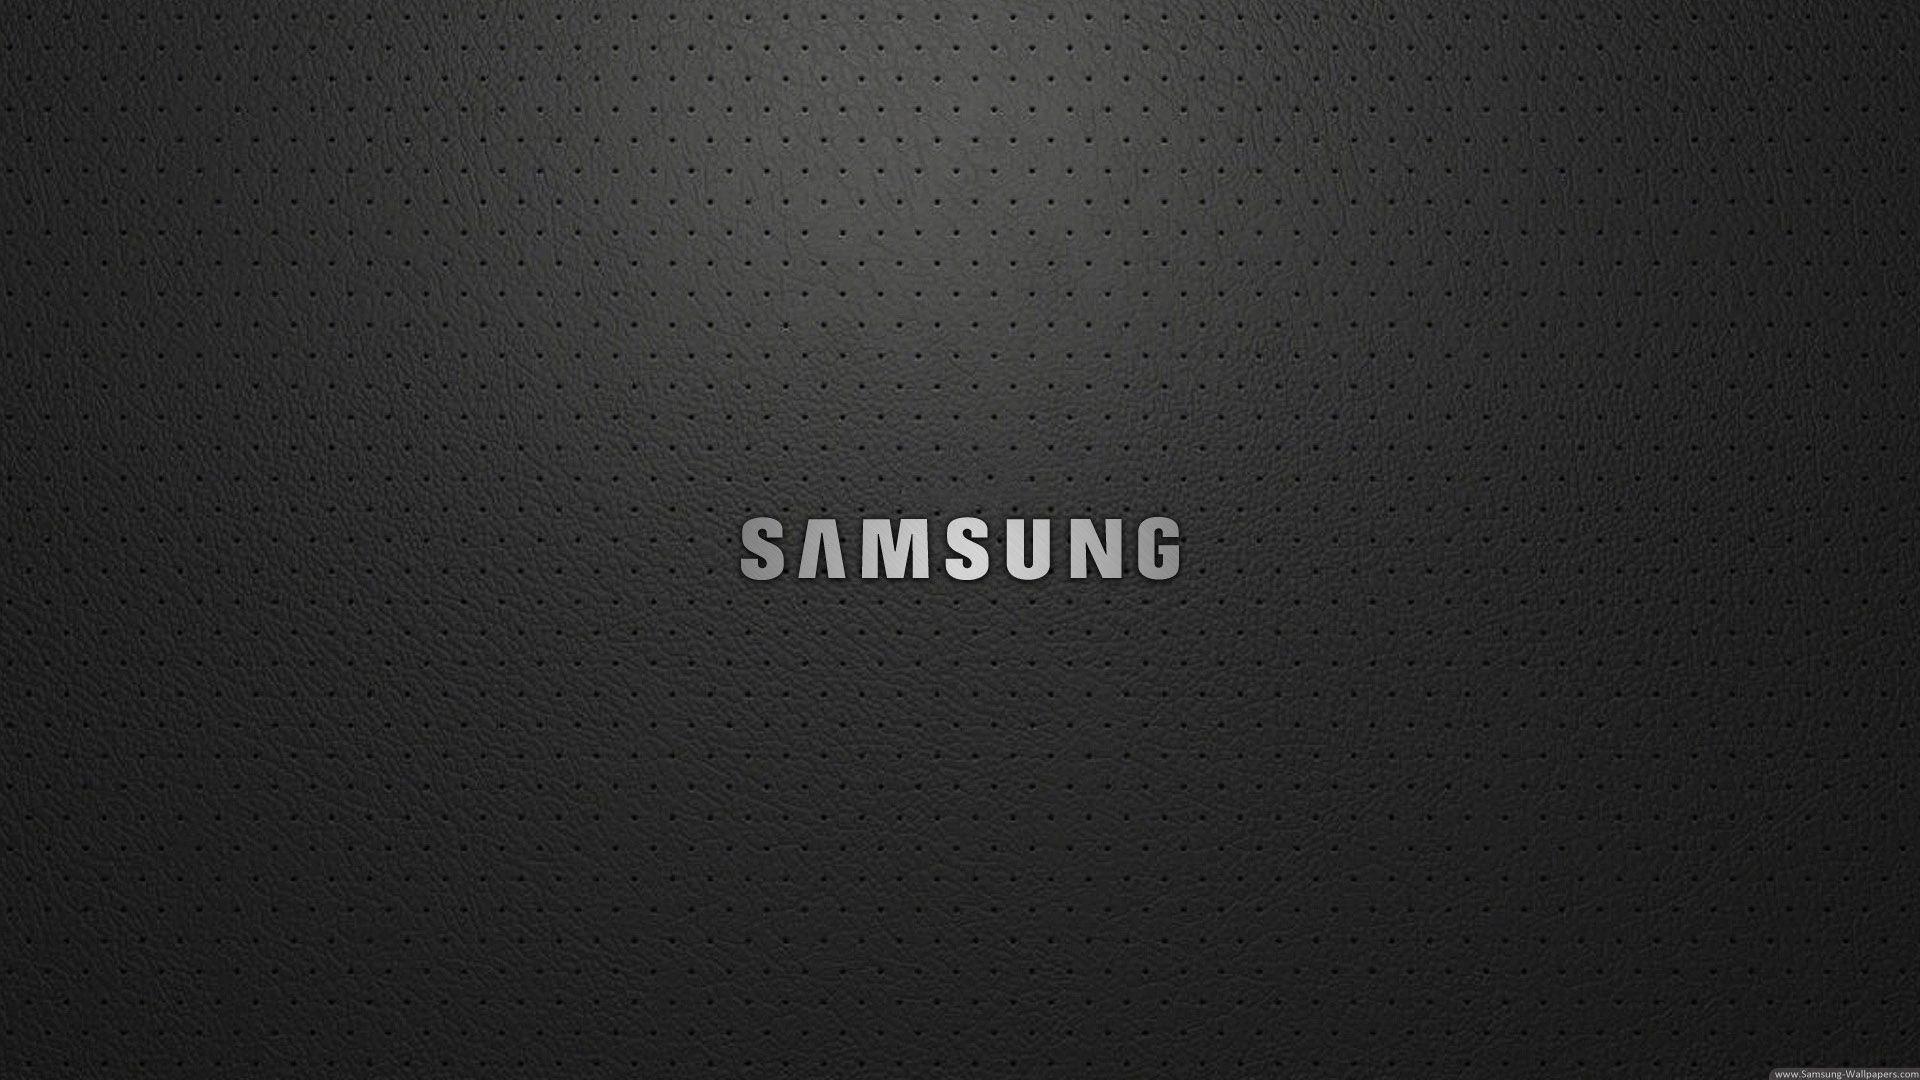 Samsung 4k Black Wallpapers Top Free Samsung 4k Black Backgrounds Wallpaperaccess